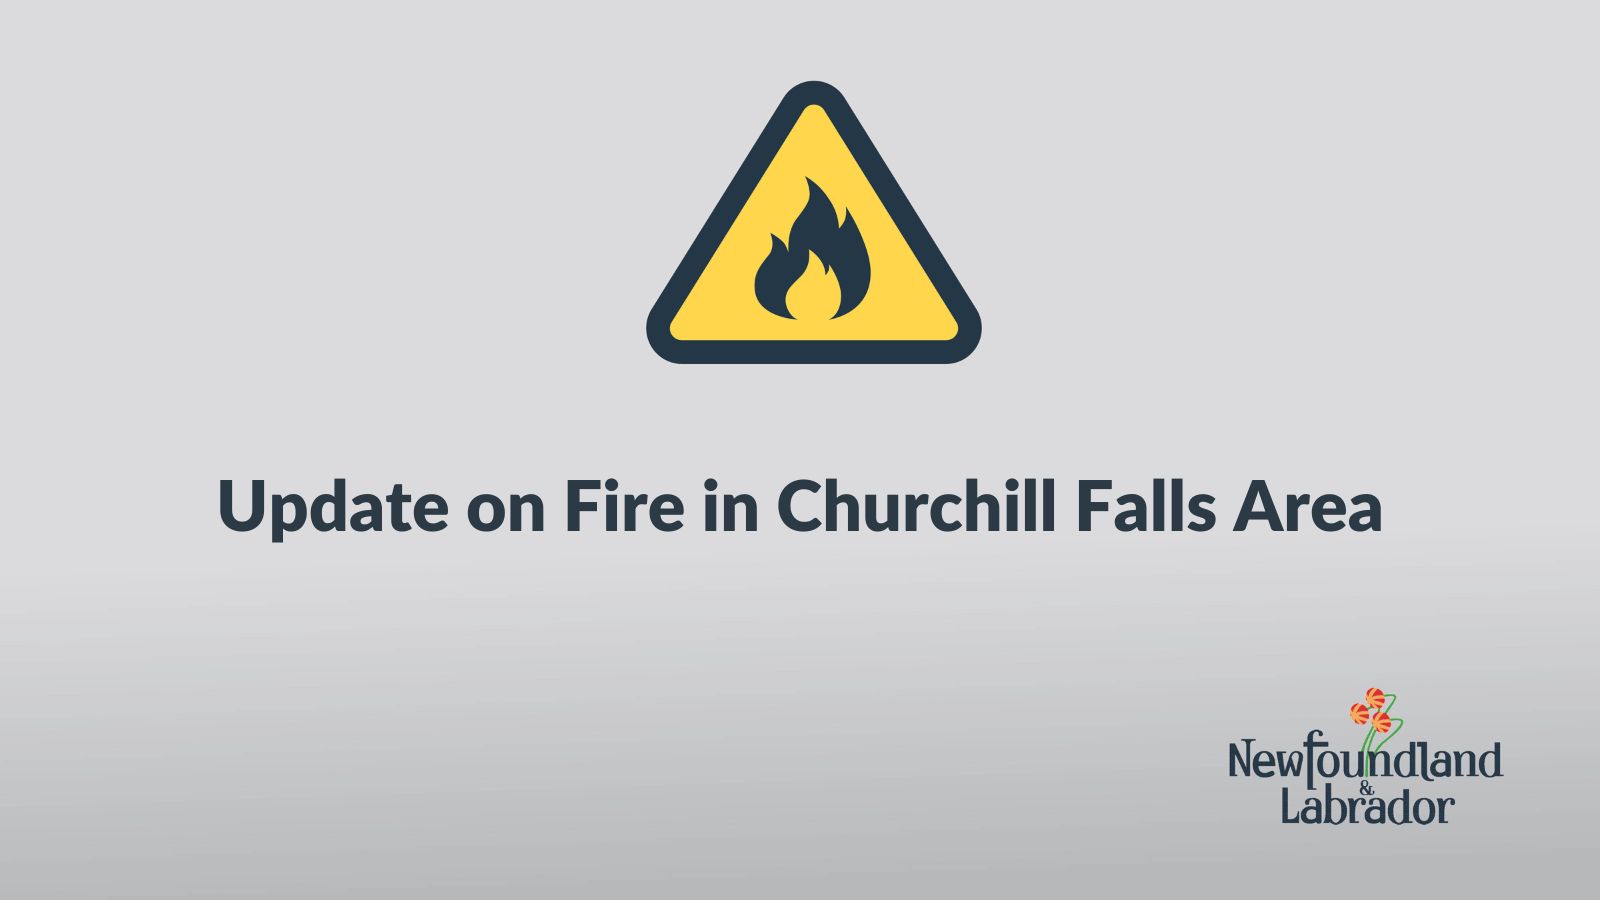 Media Advisory: Premier Furey to Provide Update on Fire in Churchill Falls Area